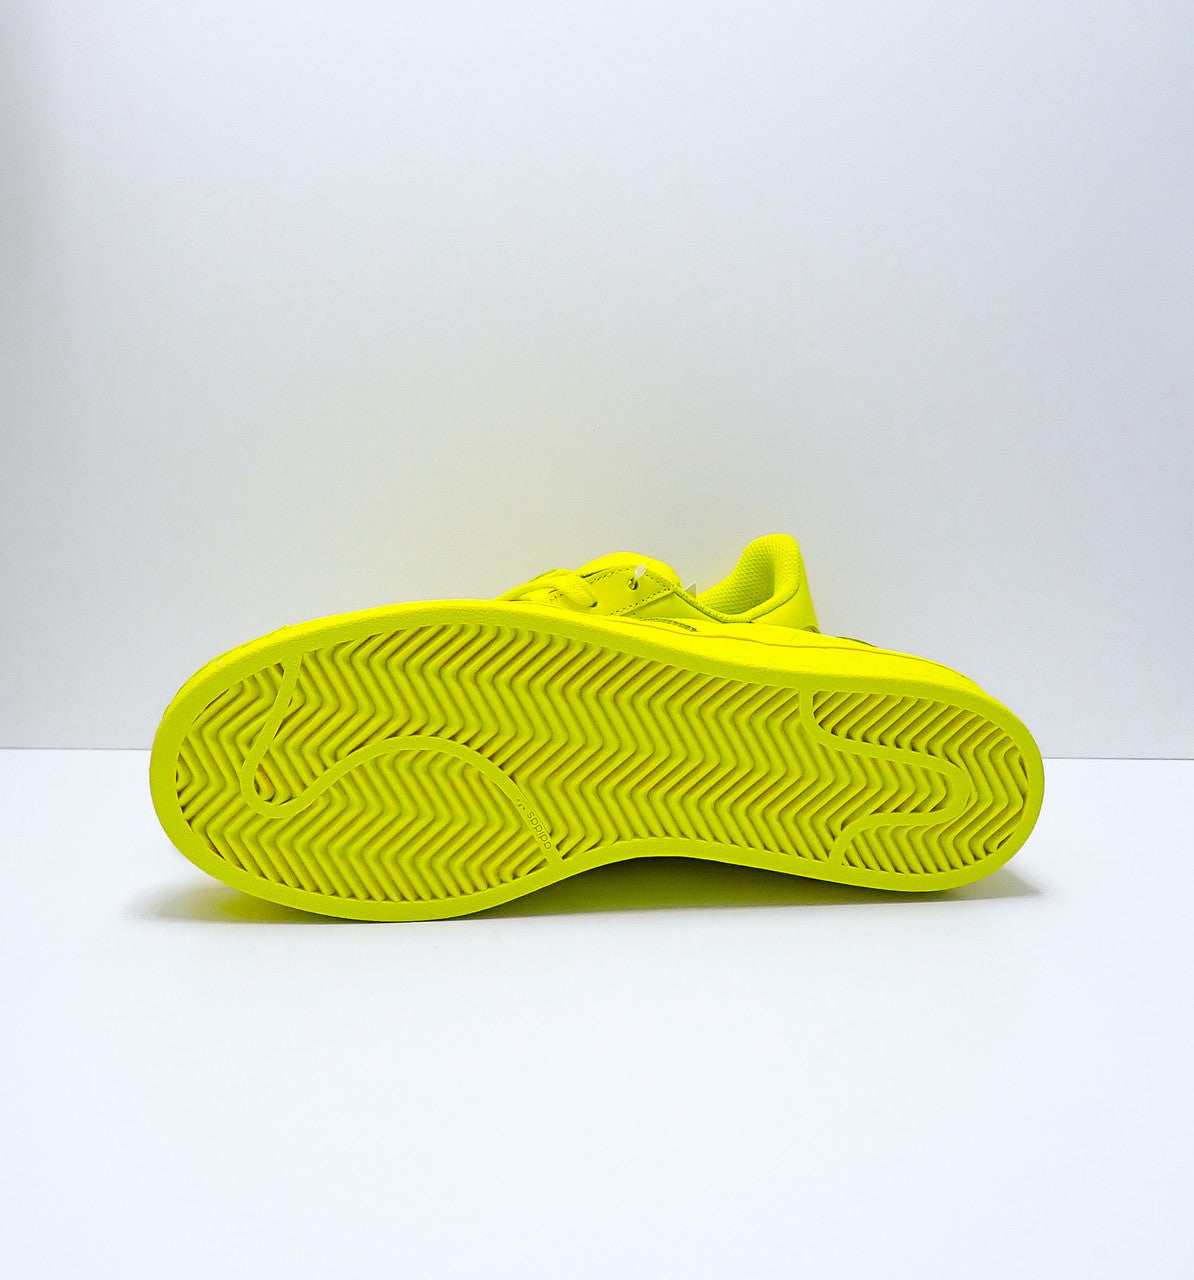 Adidas Superstar Supercolor Yellow